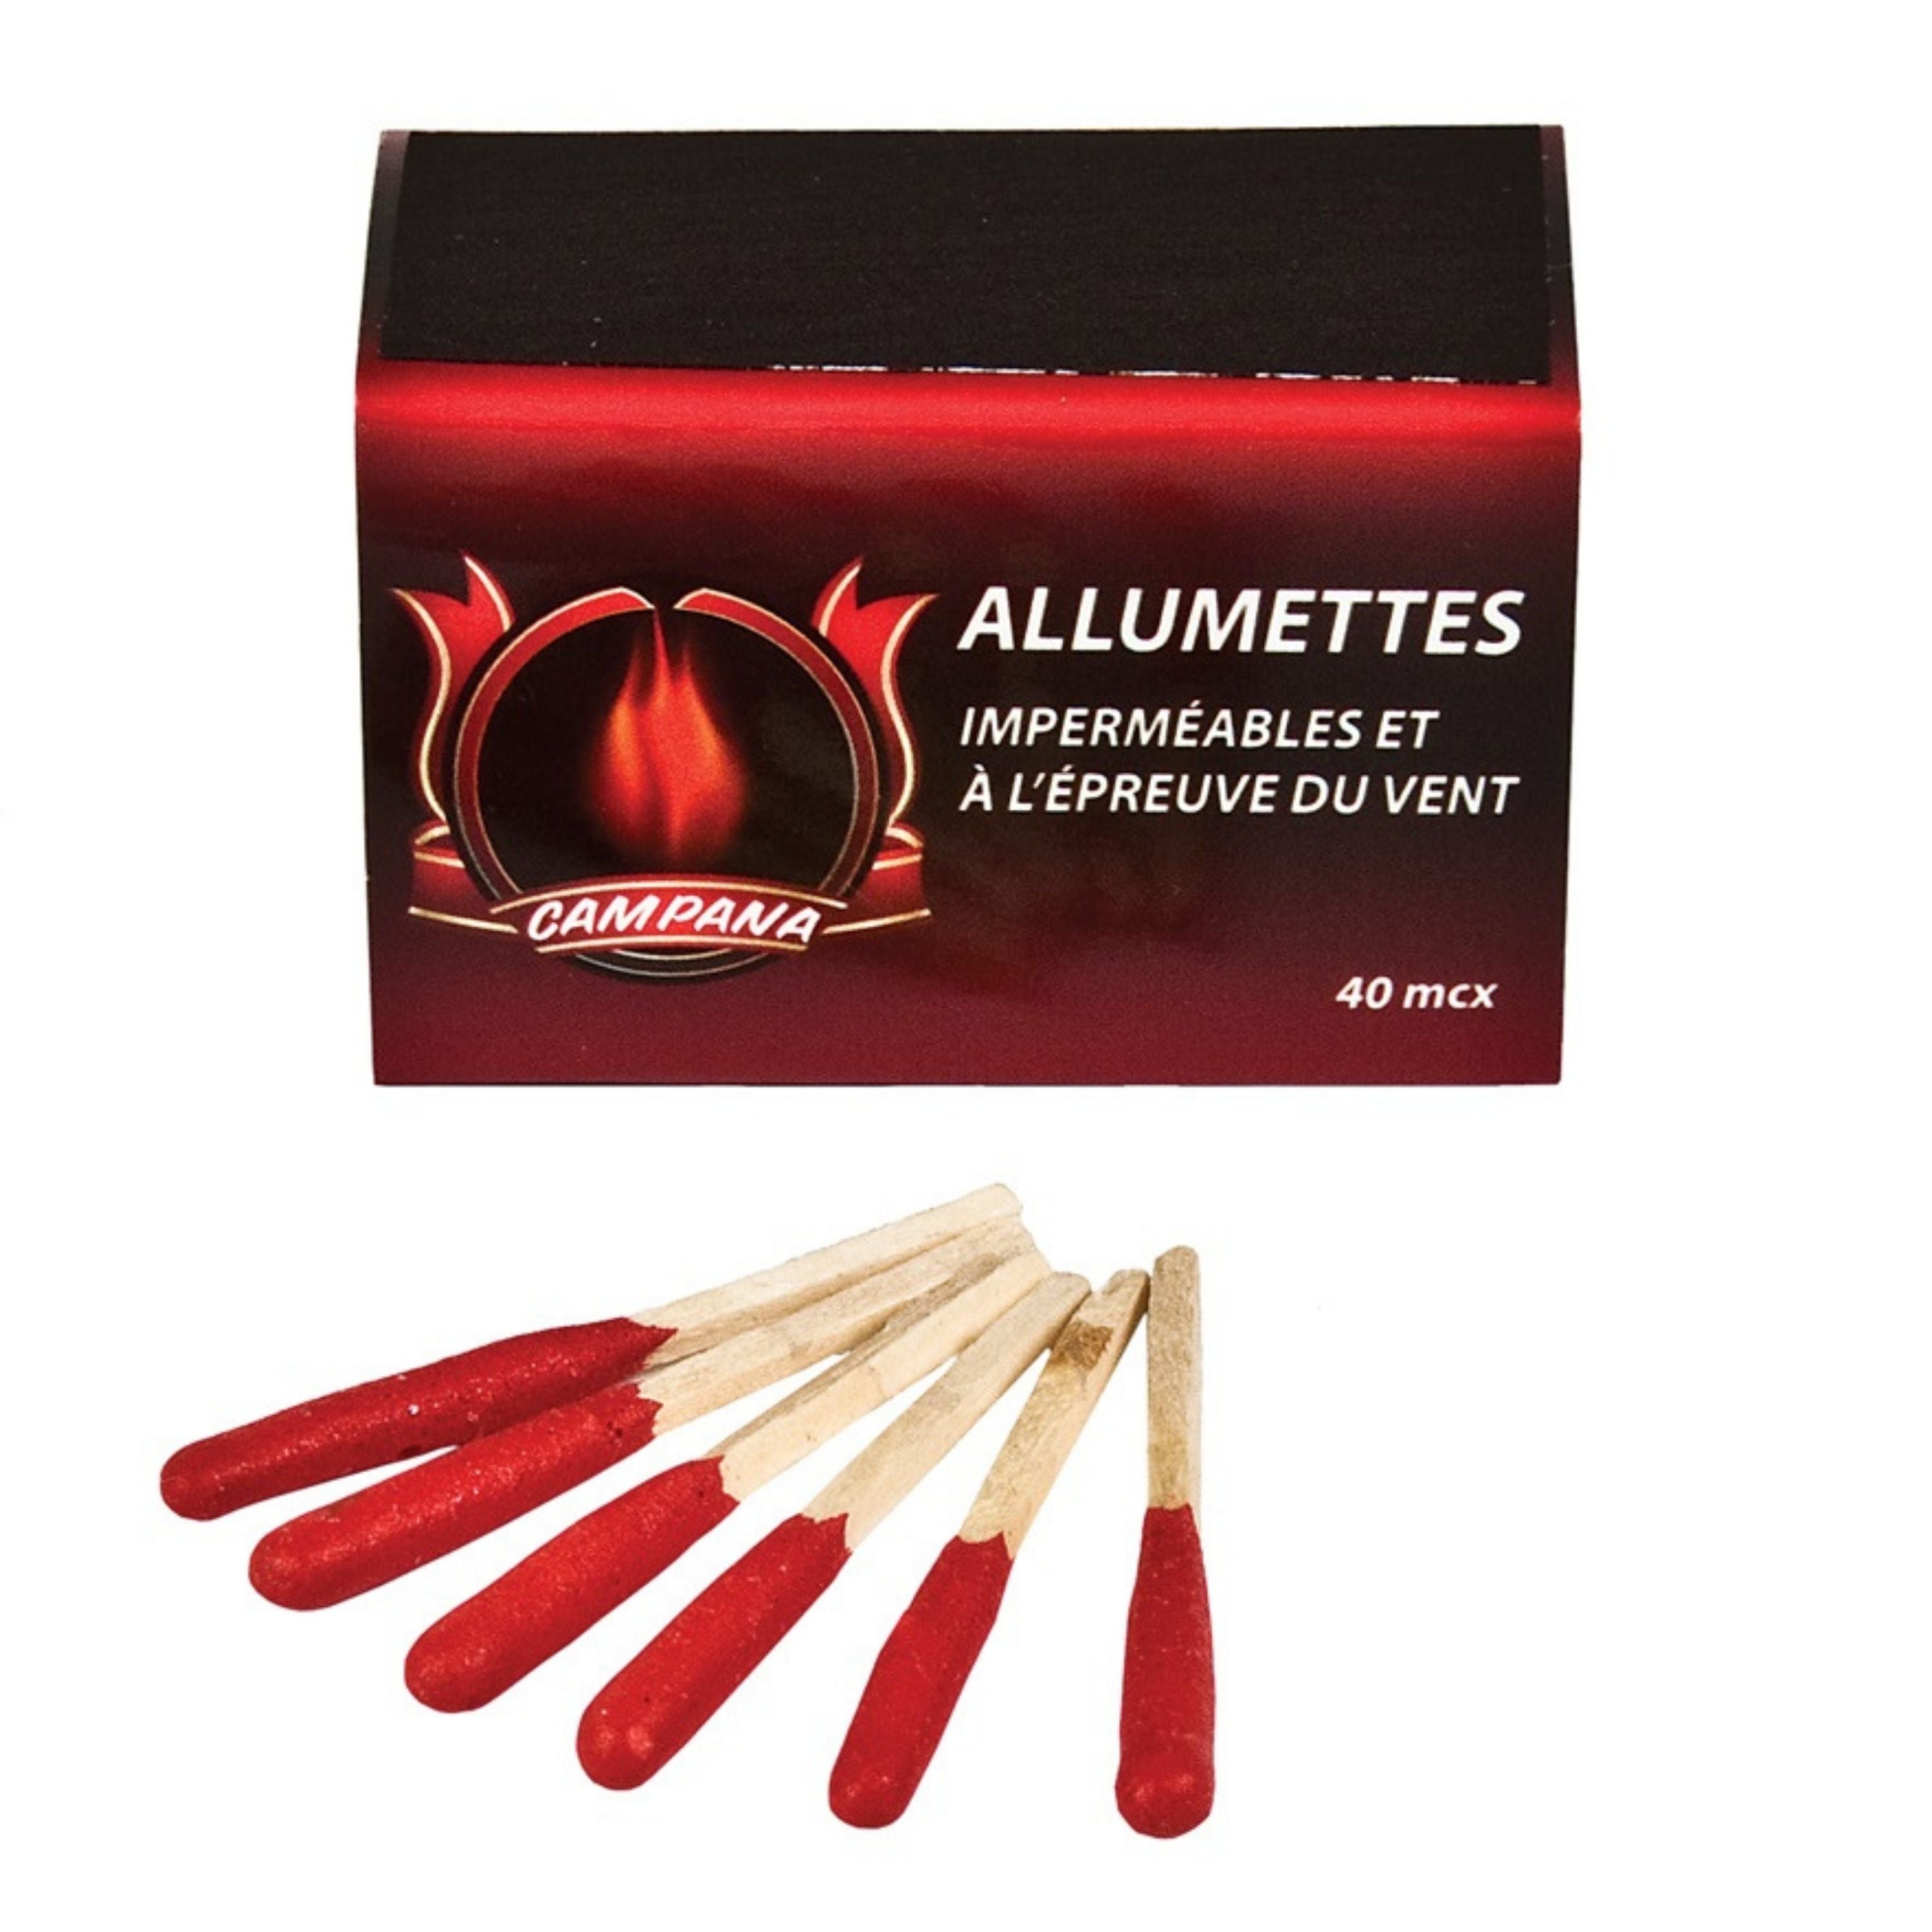 Allumettes imperméables - 2x 40/pqt||Waterproof matches - 2x 40/pkg